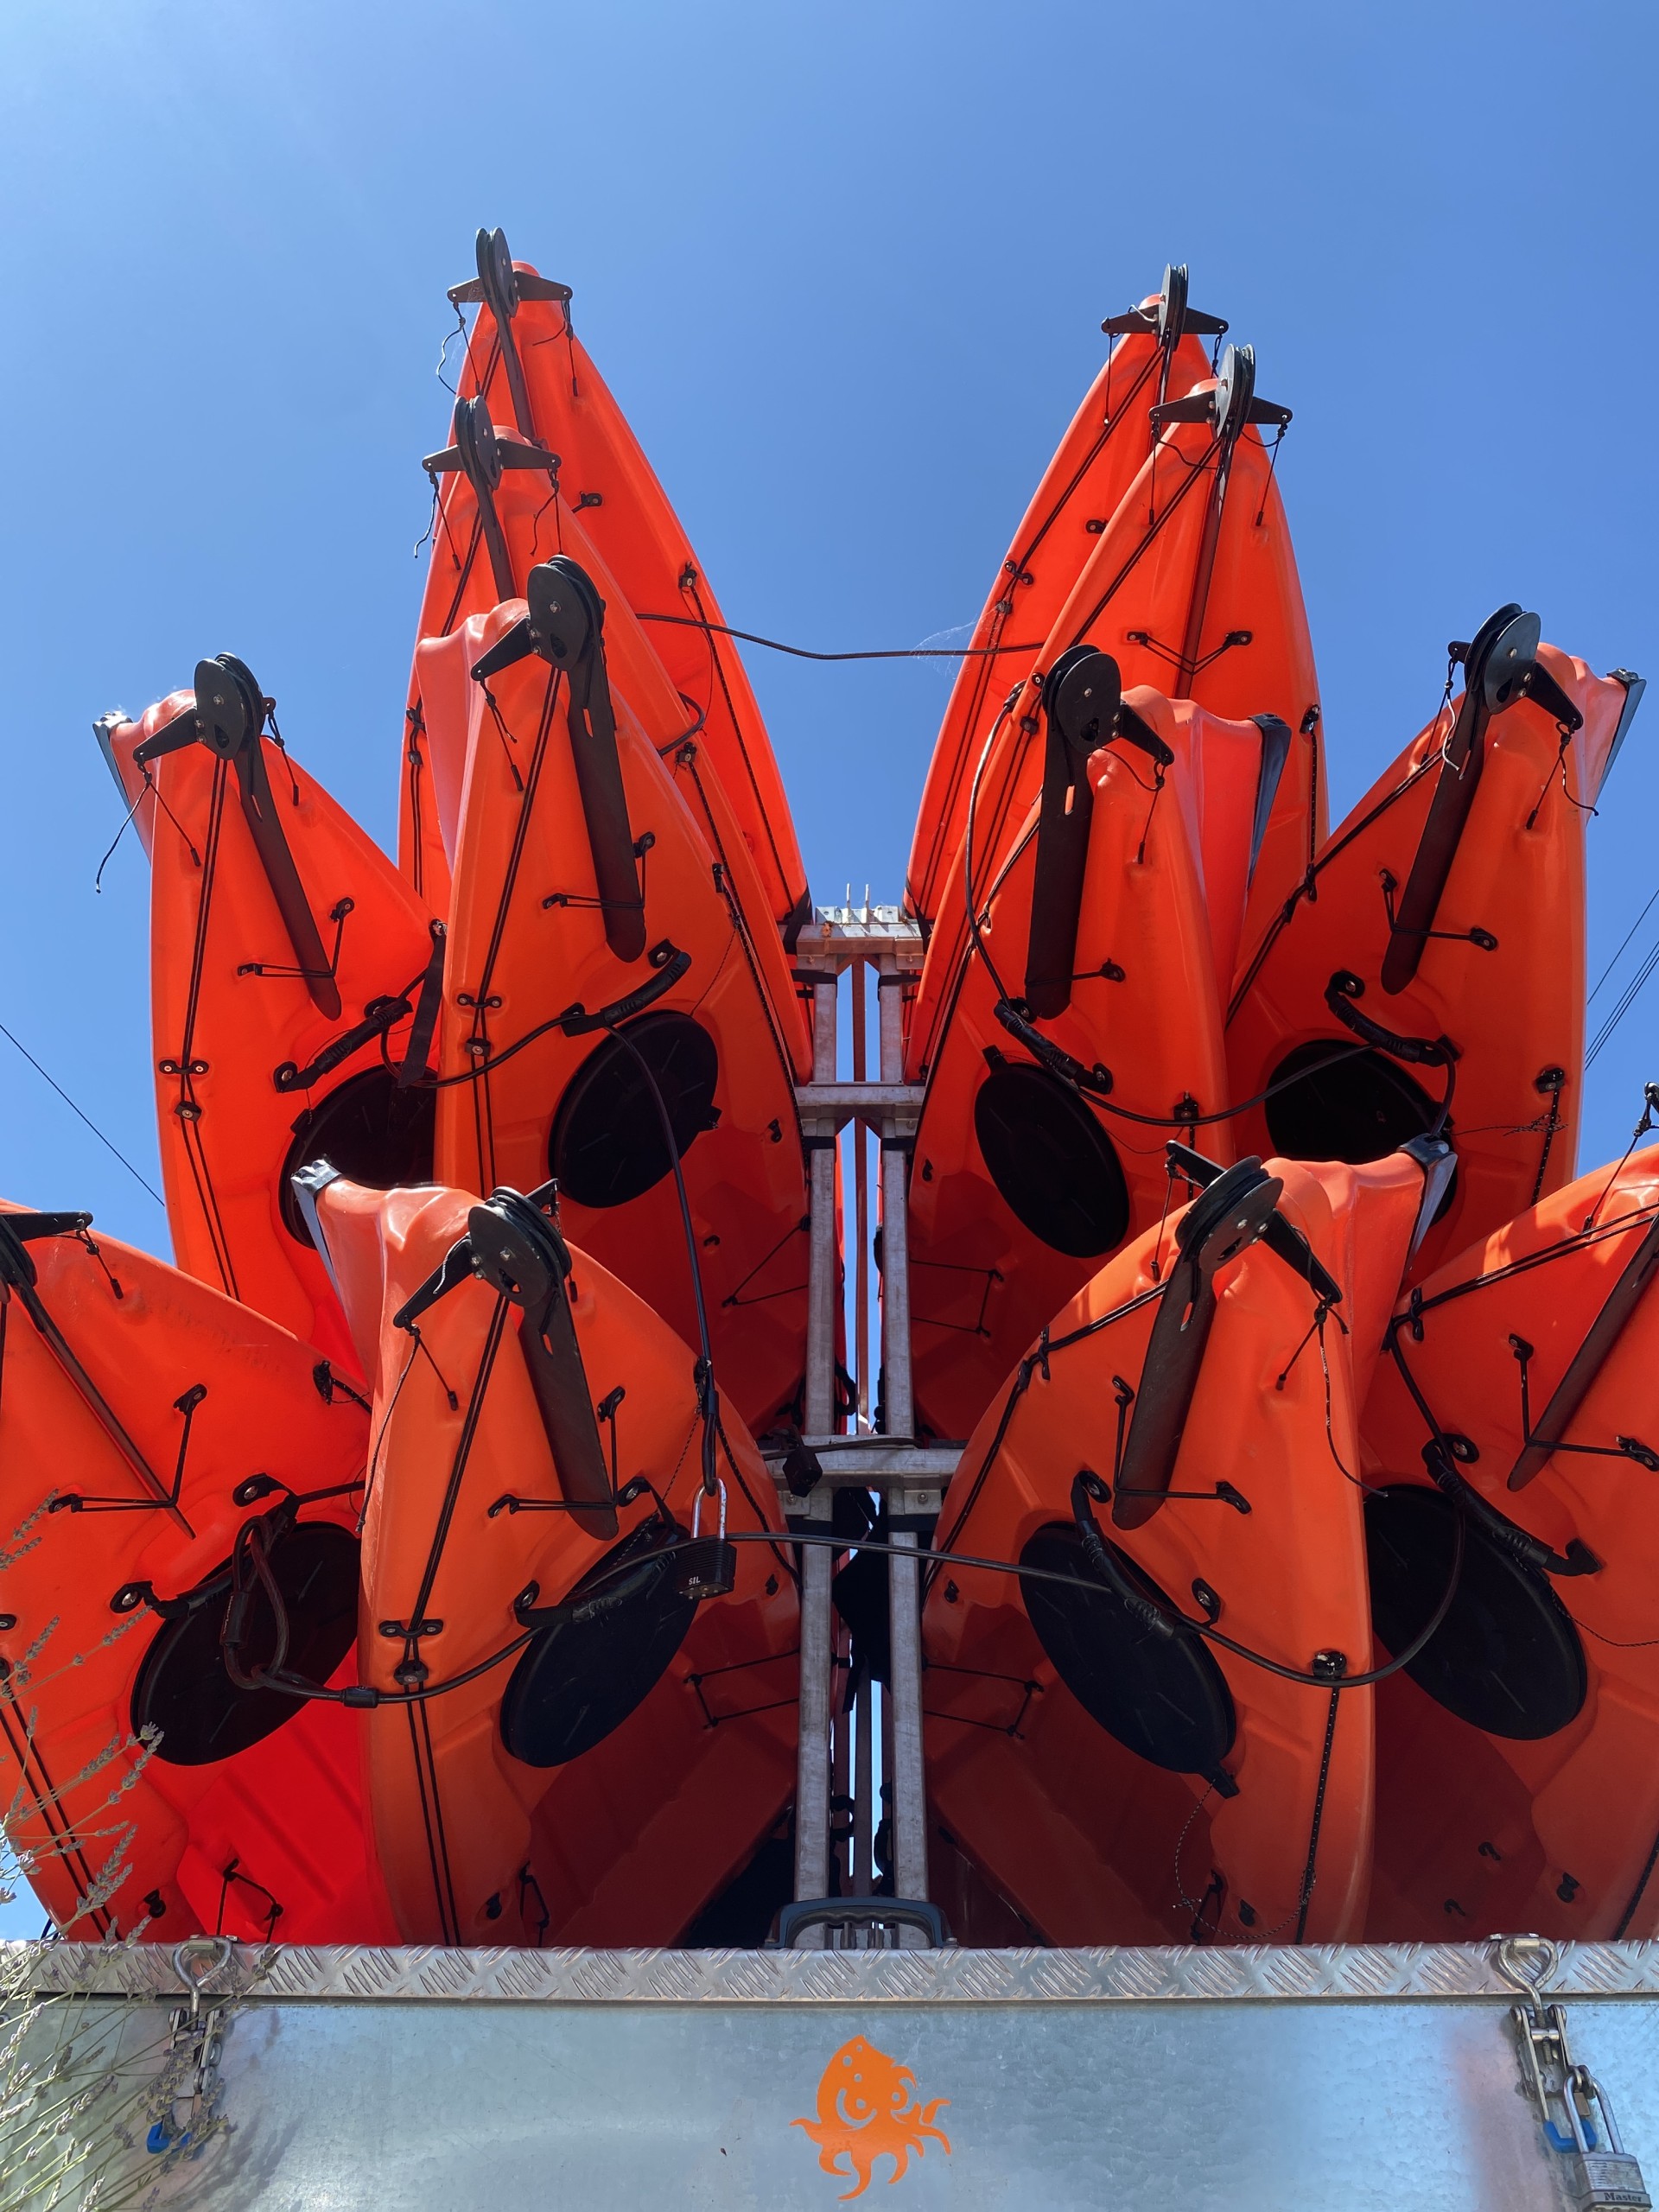 A dozen large orange kayaks loaded on a trailer.